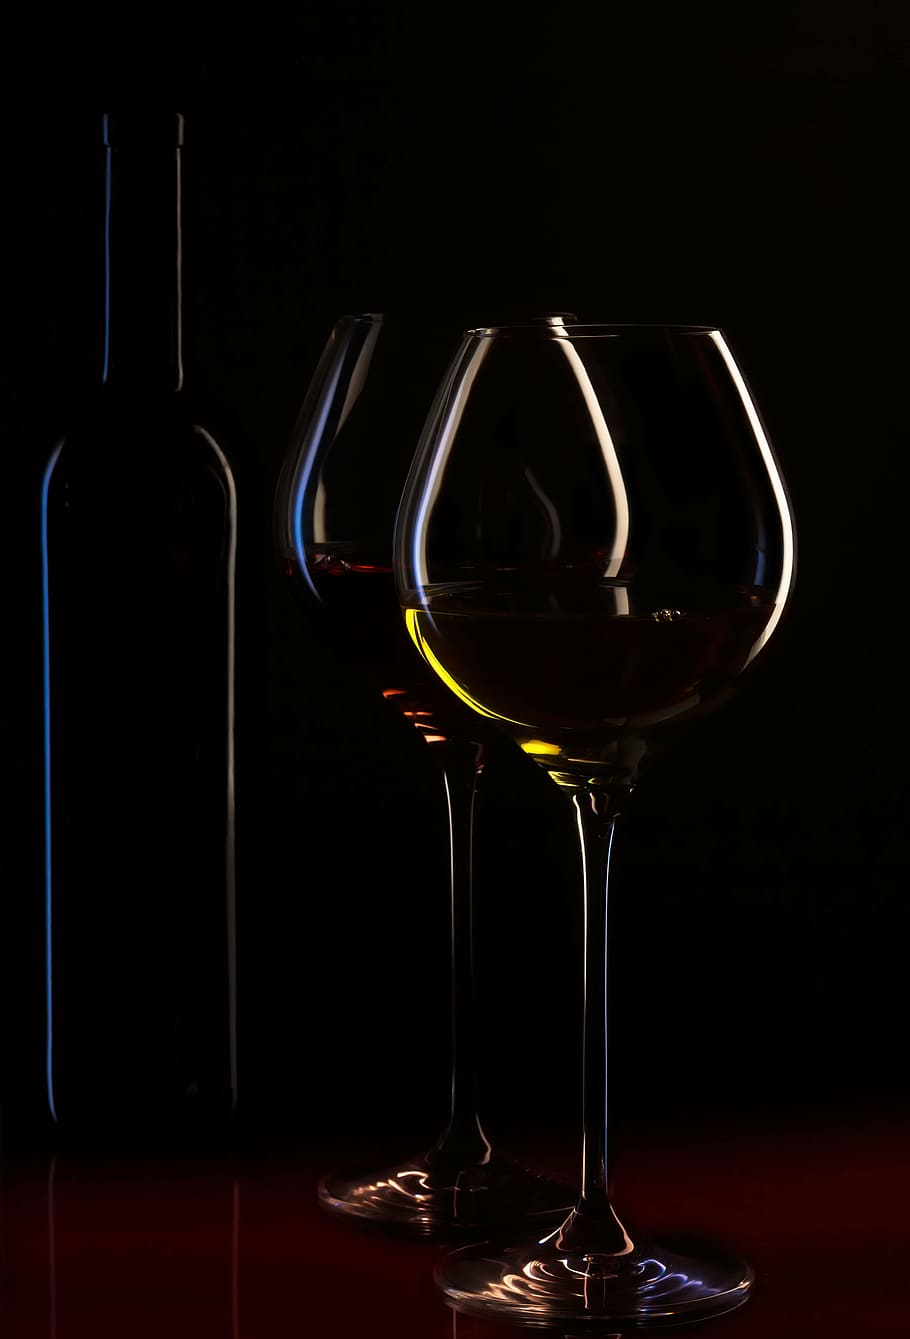 clear, glass wine glasses, bottle, wine bottle, wine glasses, wine, ambience, wine list, liquid, red wine